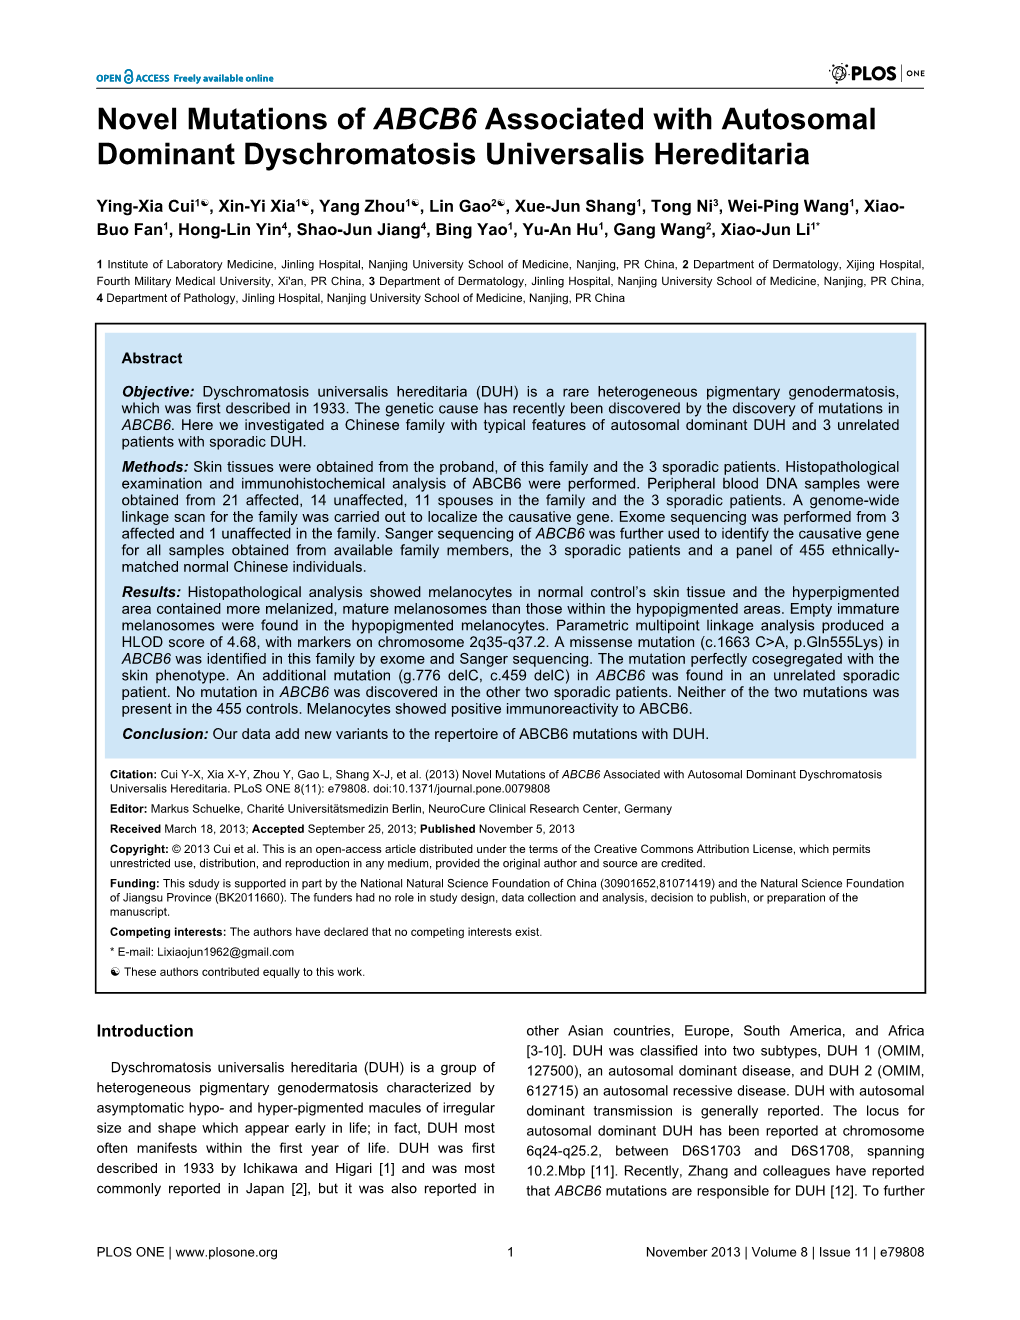 Novel Mutations of ABCB6 Associated with Autosomal Dominant Dyschromatosis Universalis Hereditaria